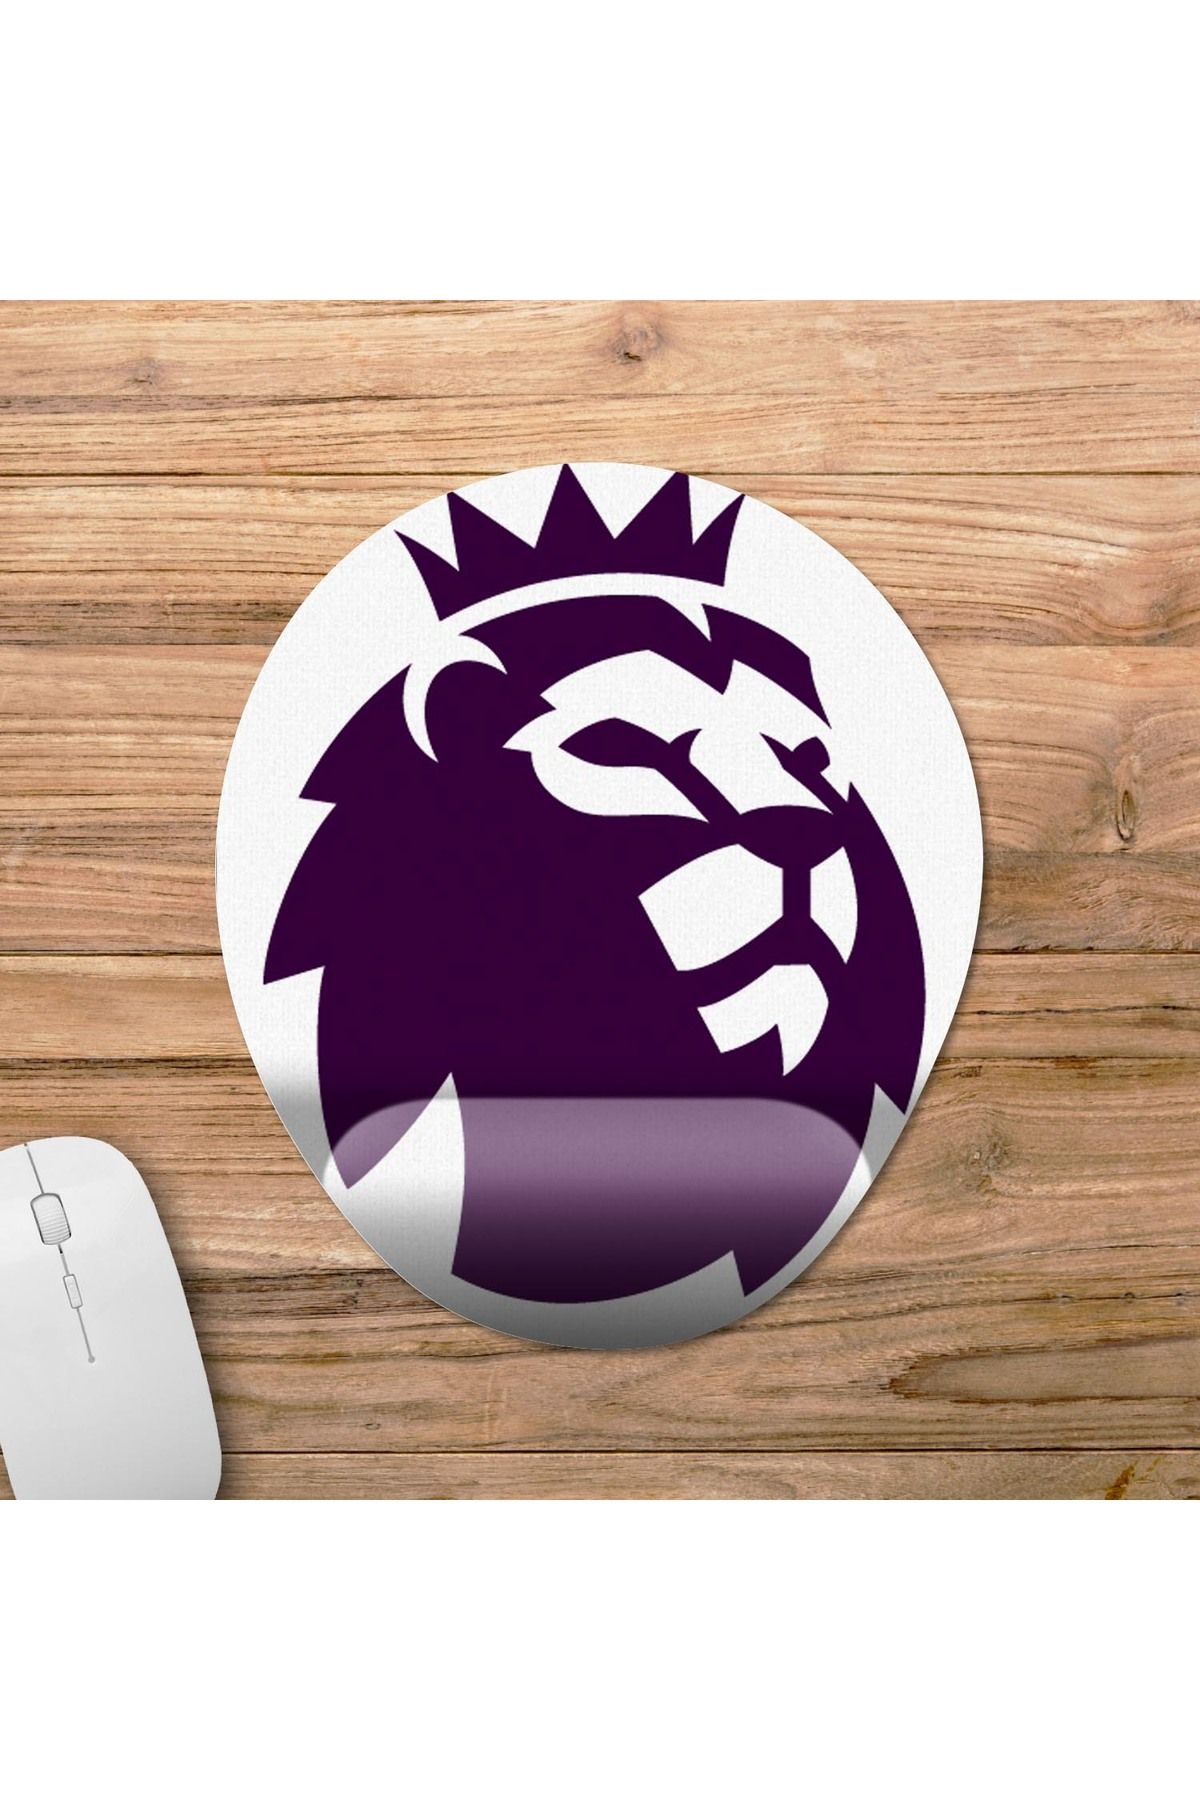 Pixxa Premier League - İngiltere Futbol Ligi Bilek Destekli Mousepad Model - 2 Oval